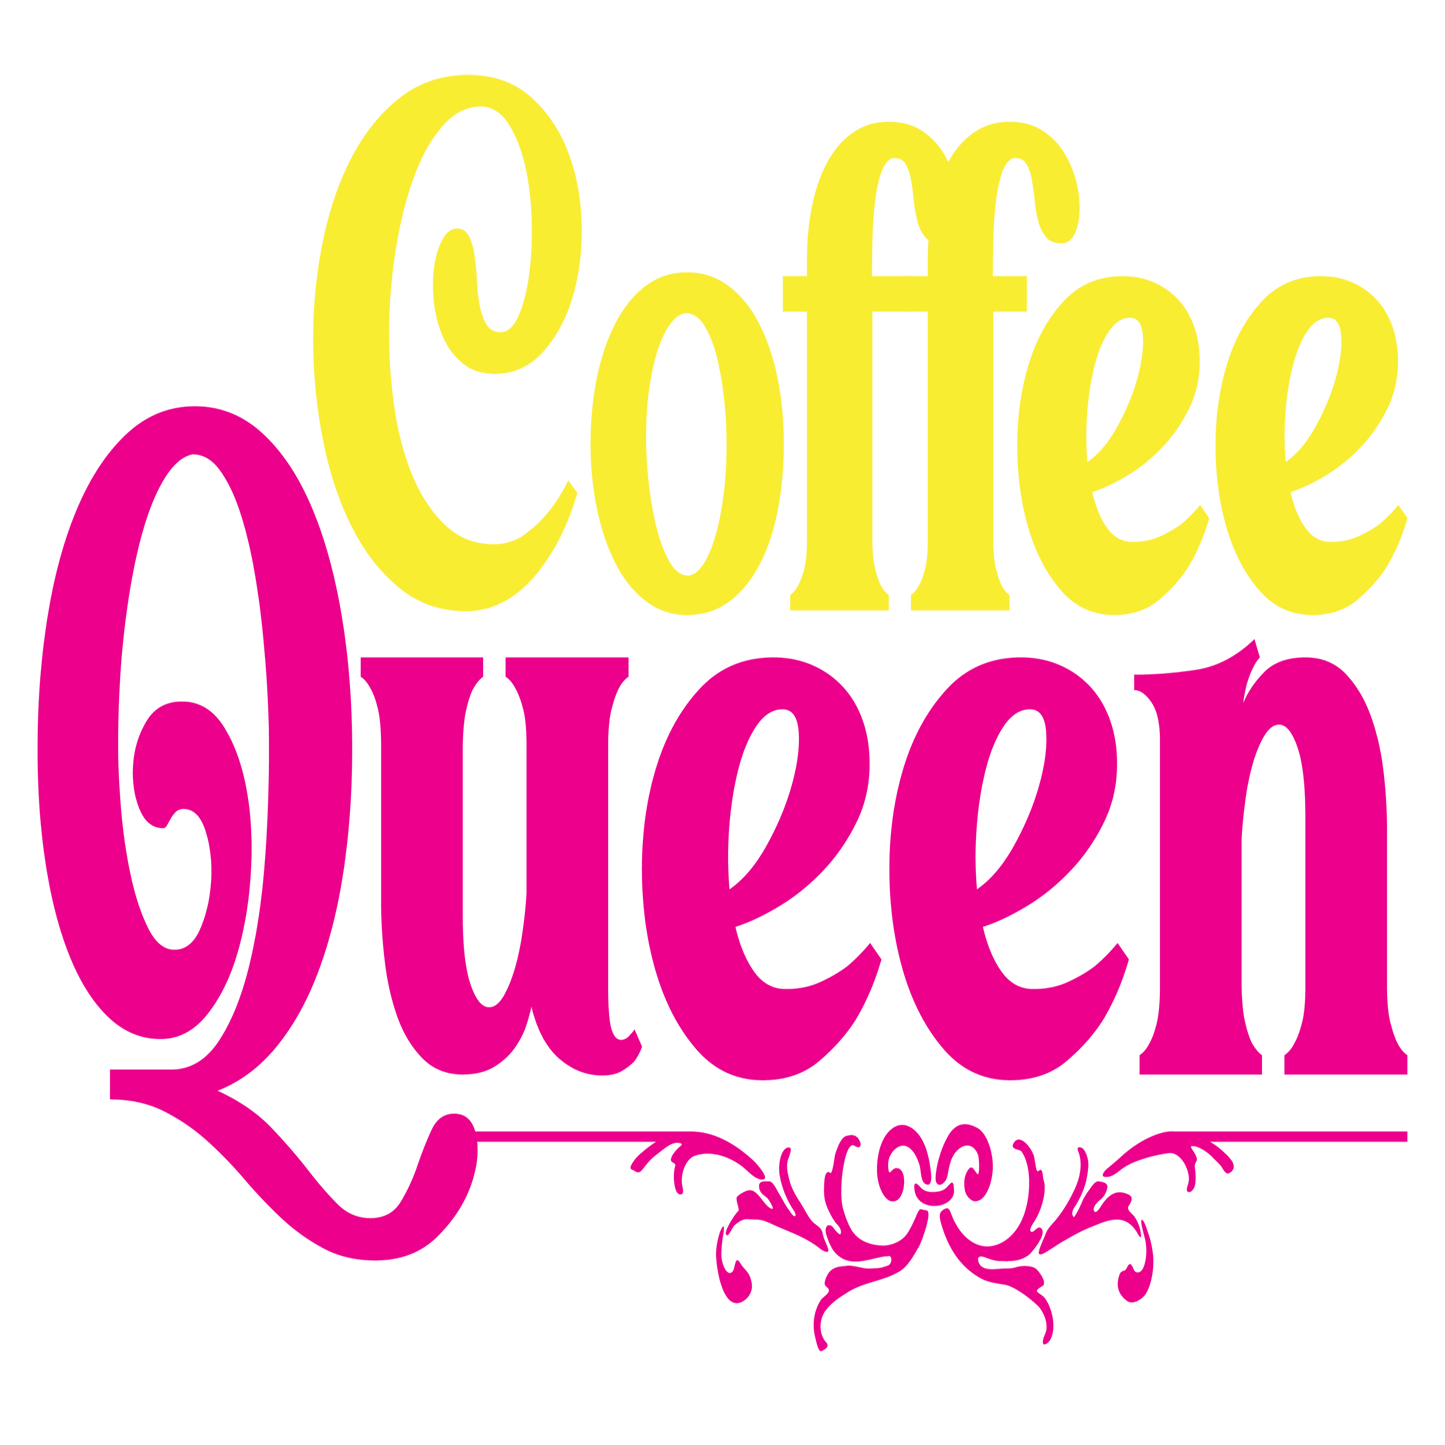 "Coffee Queen" Transfer